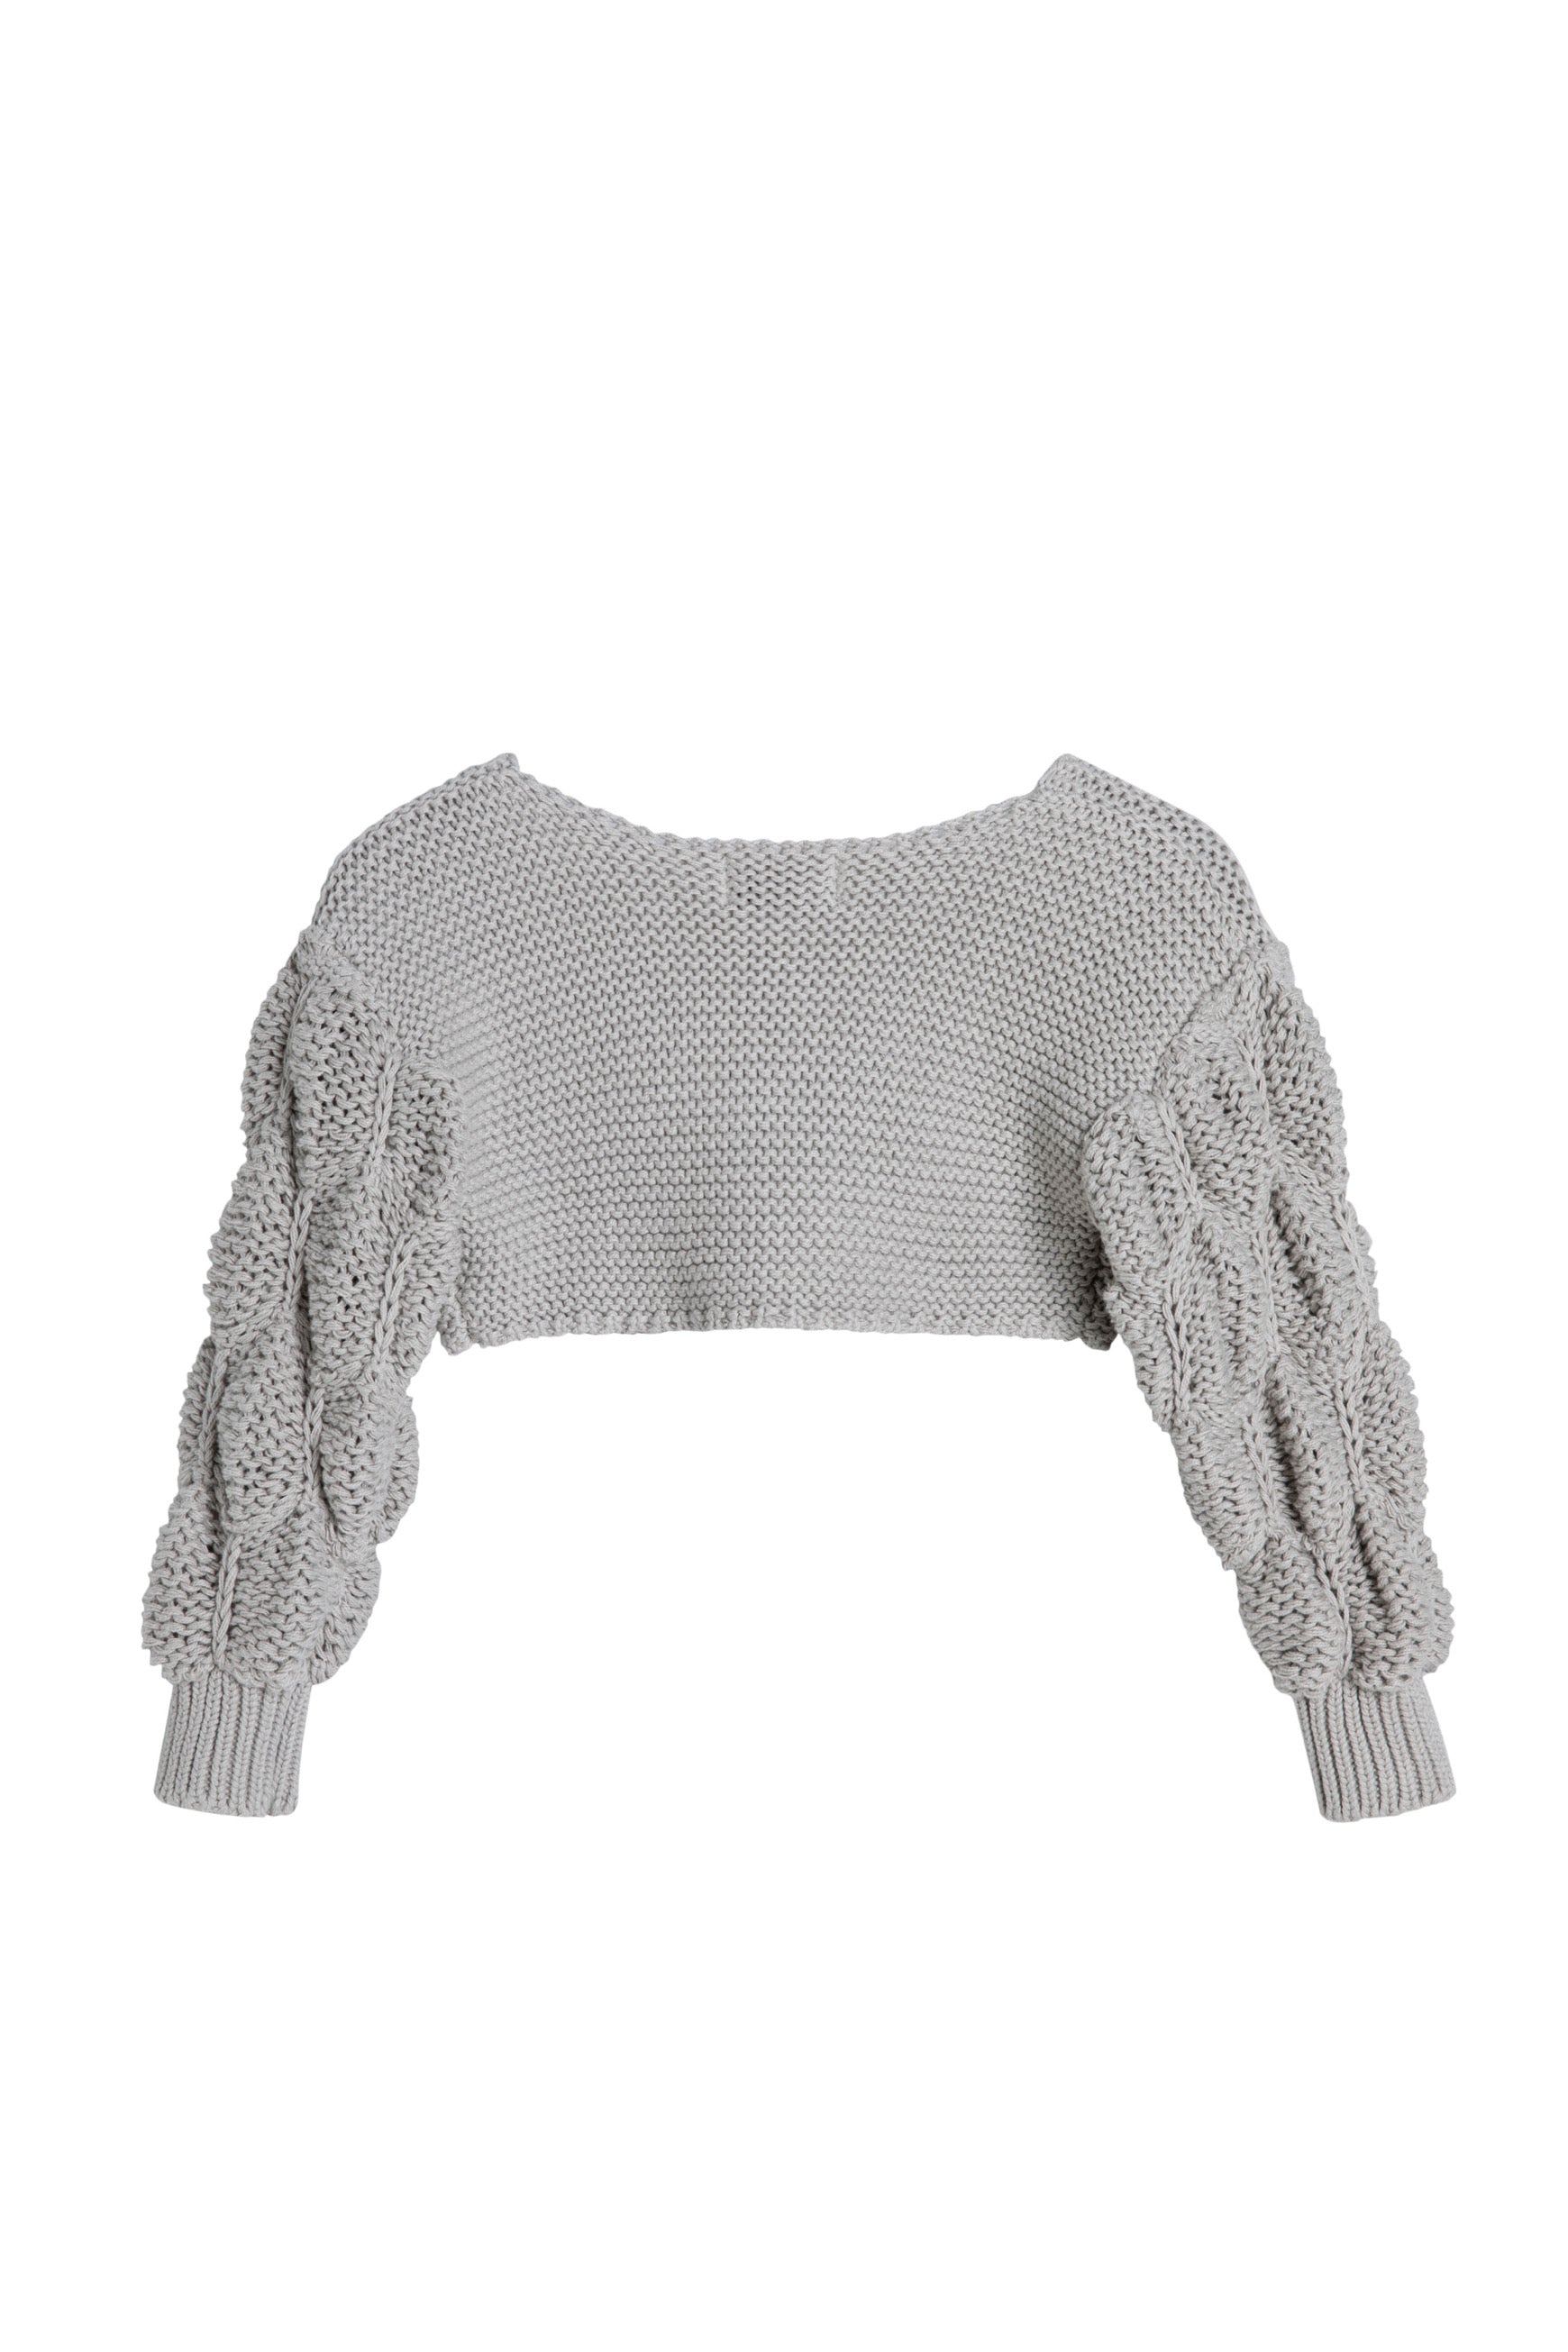 Grey knitted bolero